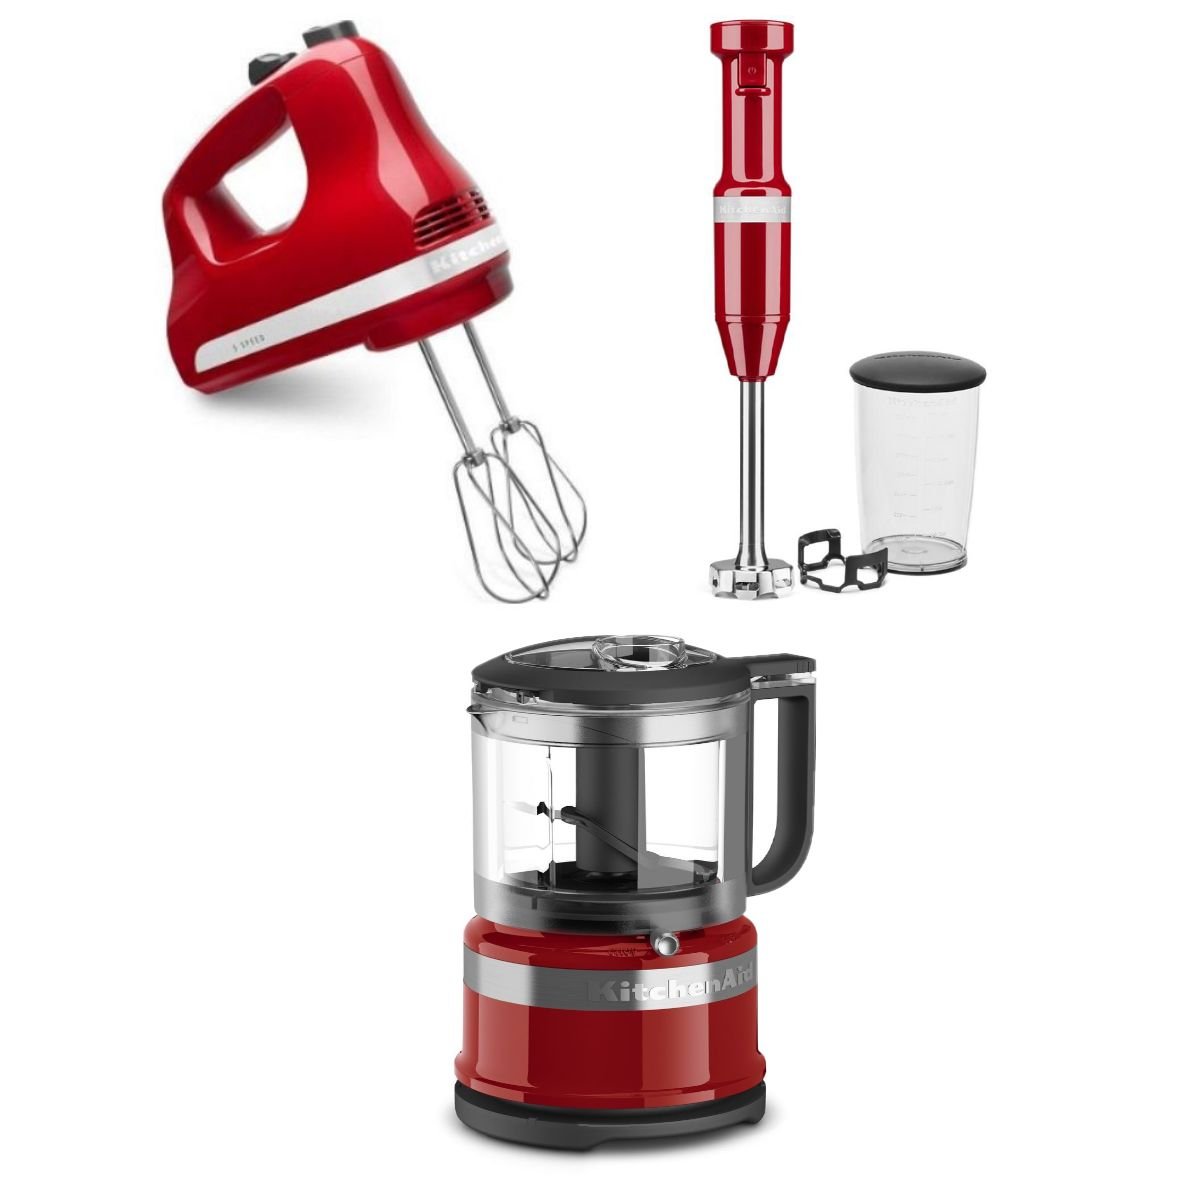 Empire Red Small Appliances Set - Mini Food Processor, & Hand Mixer | KitchenAid Everything Kitchens